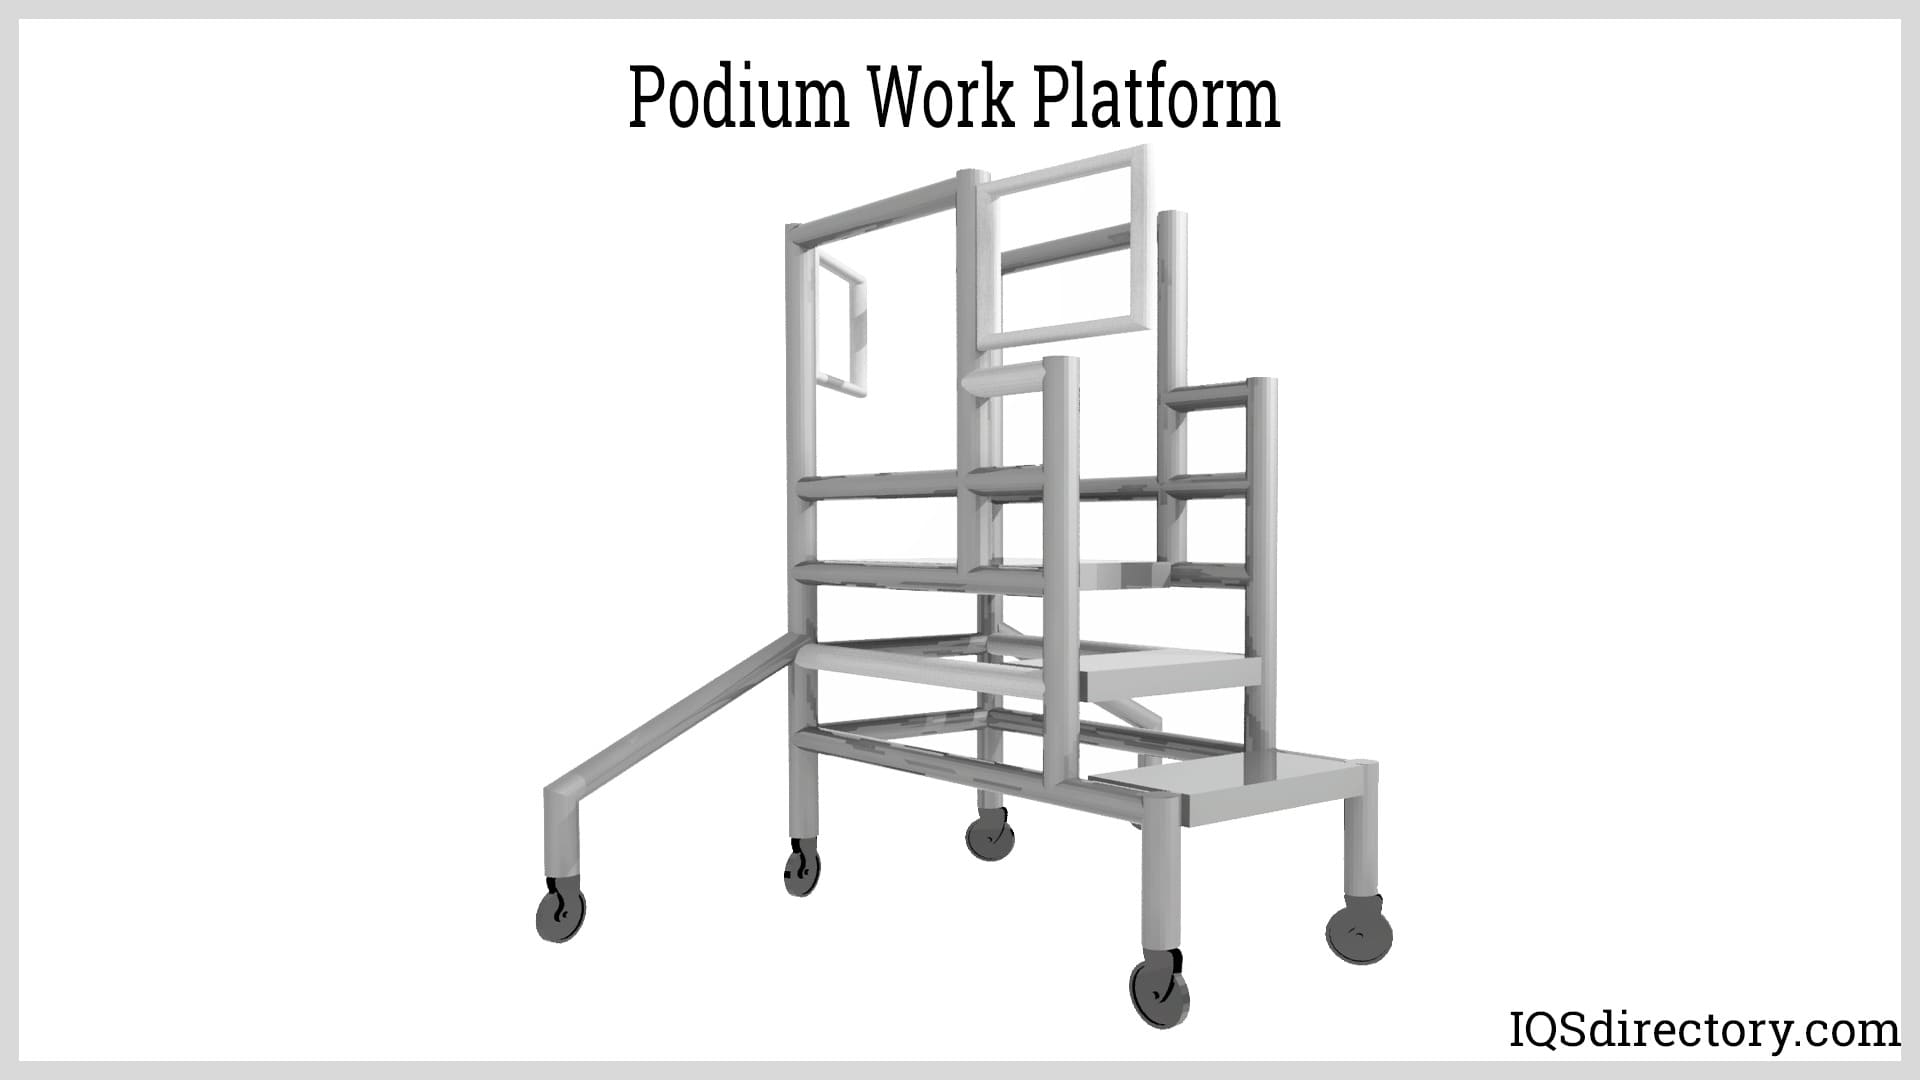 Podium Work Platform